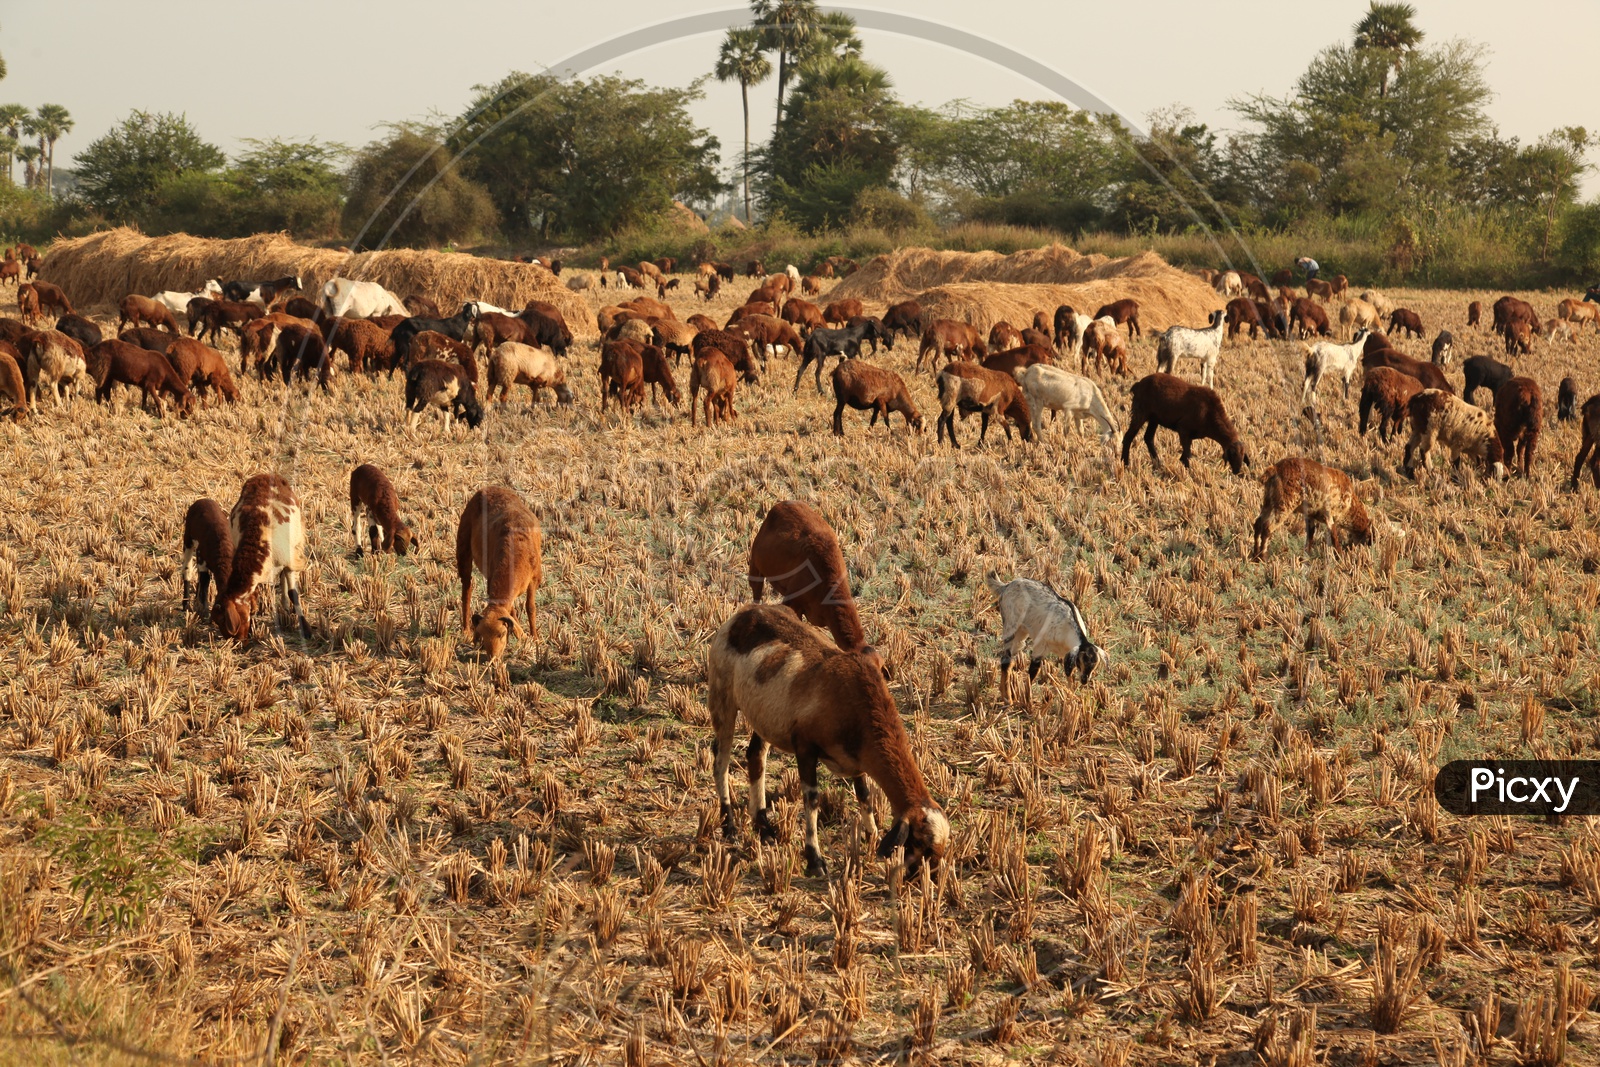 Goats grazing in the fields